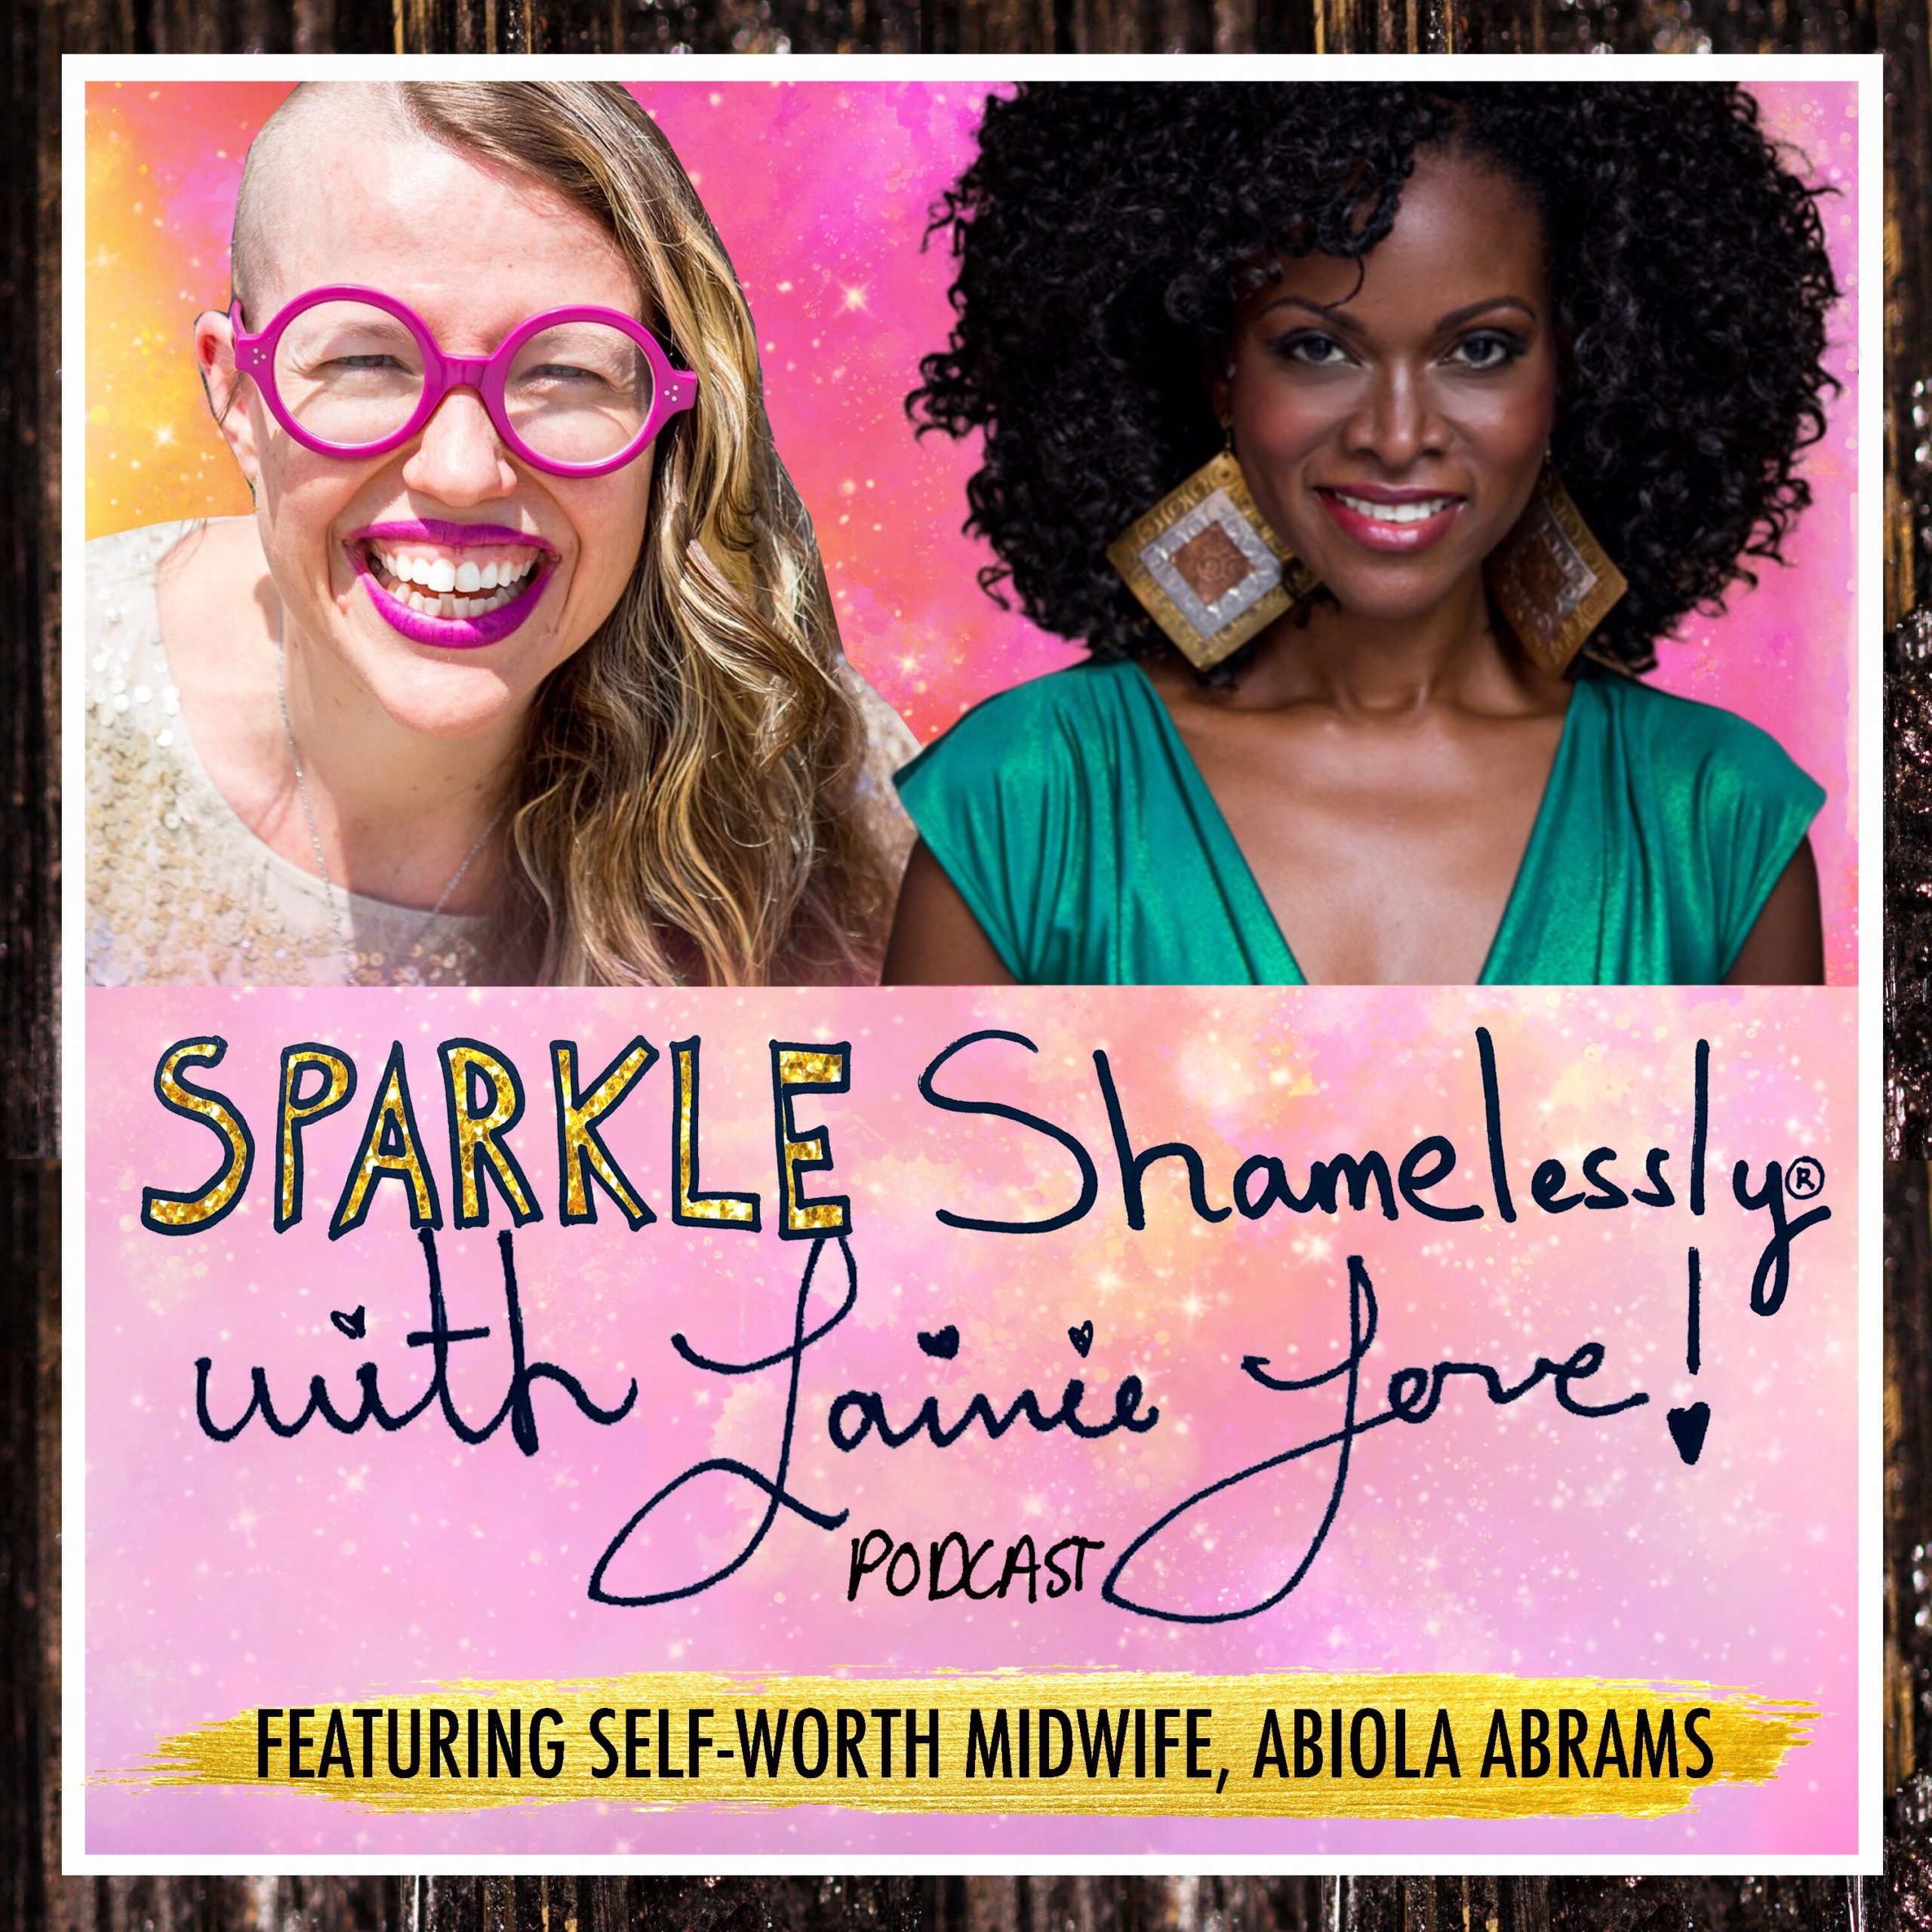 Sparkle Shamelessly Podcast Lainie and Abiola